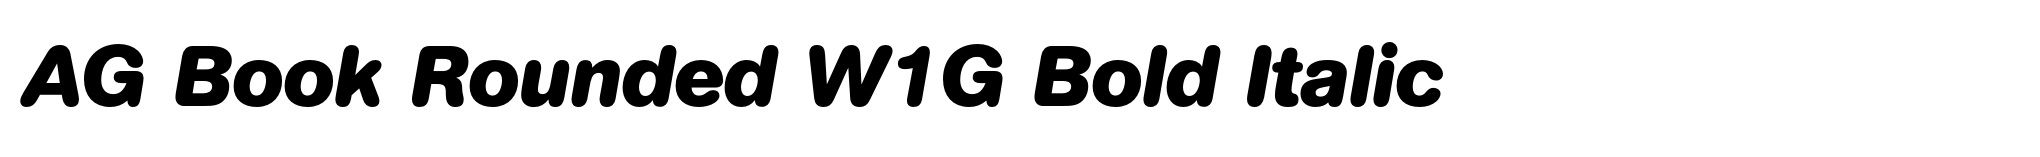 AG Book Rounded W1G Bold Italic image